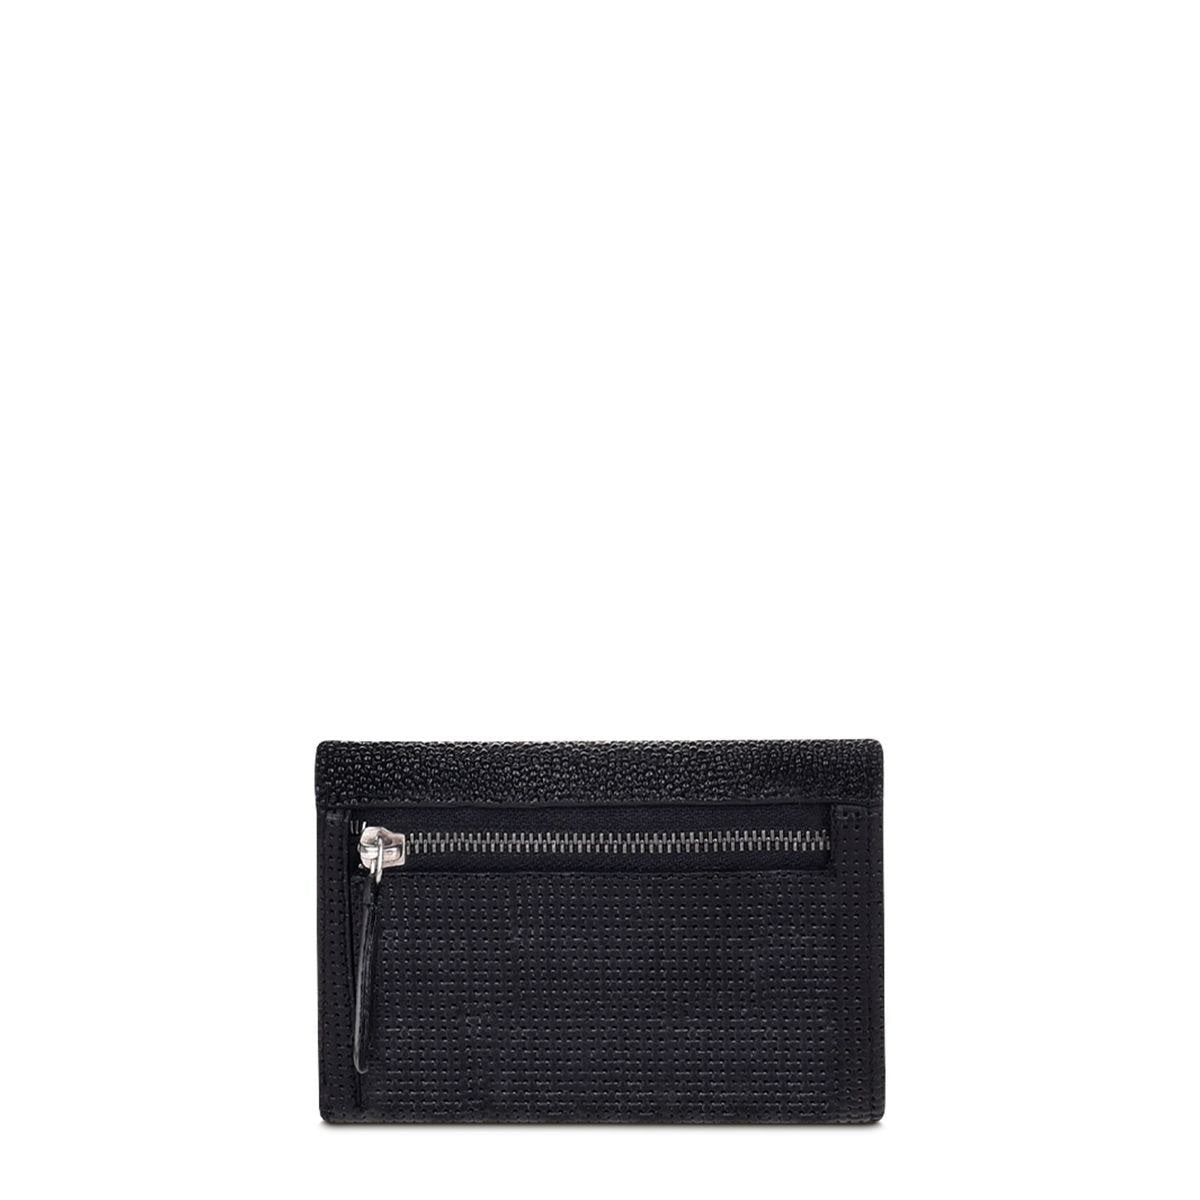 BD197MA - Cuadra black fashion tri-fold stingray leather wallet for women-Kuet.us